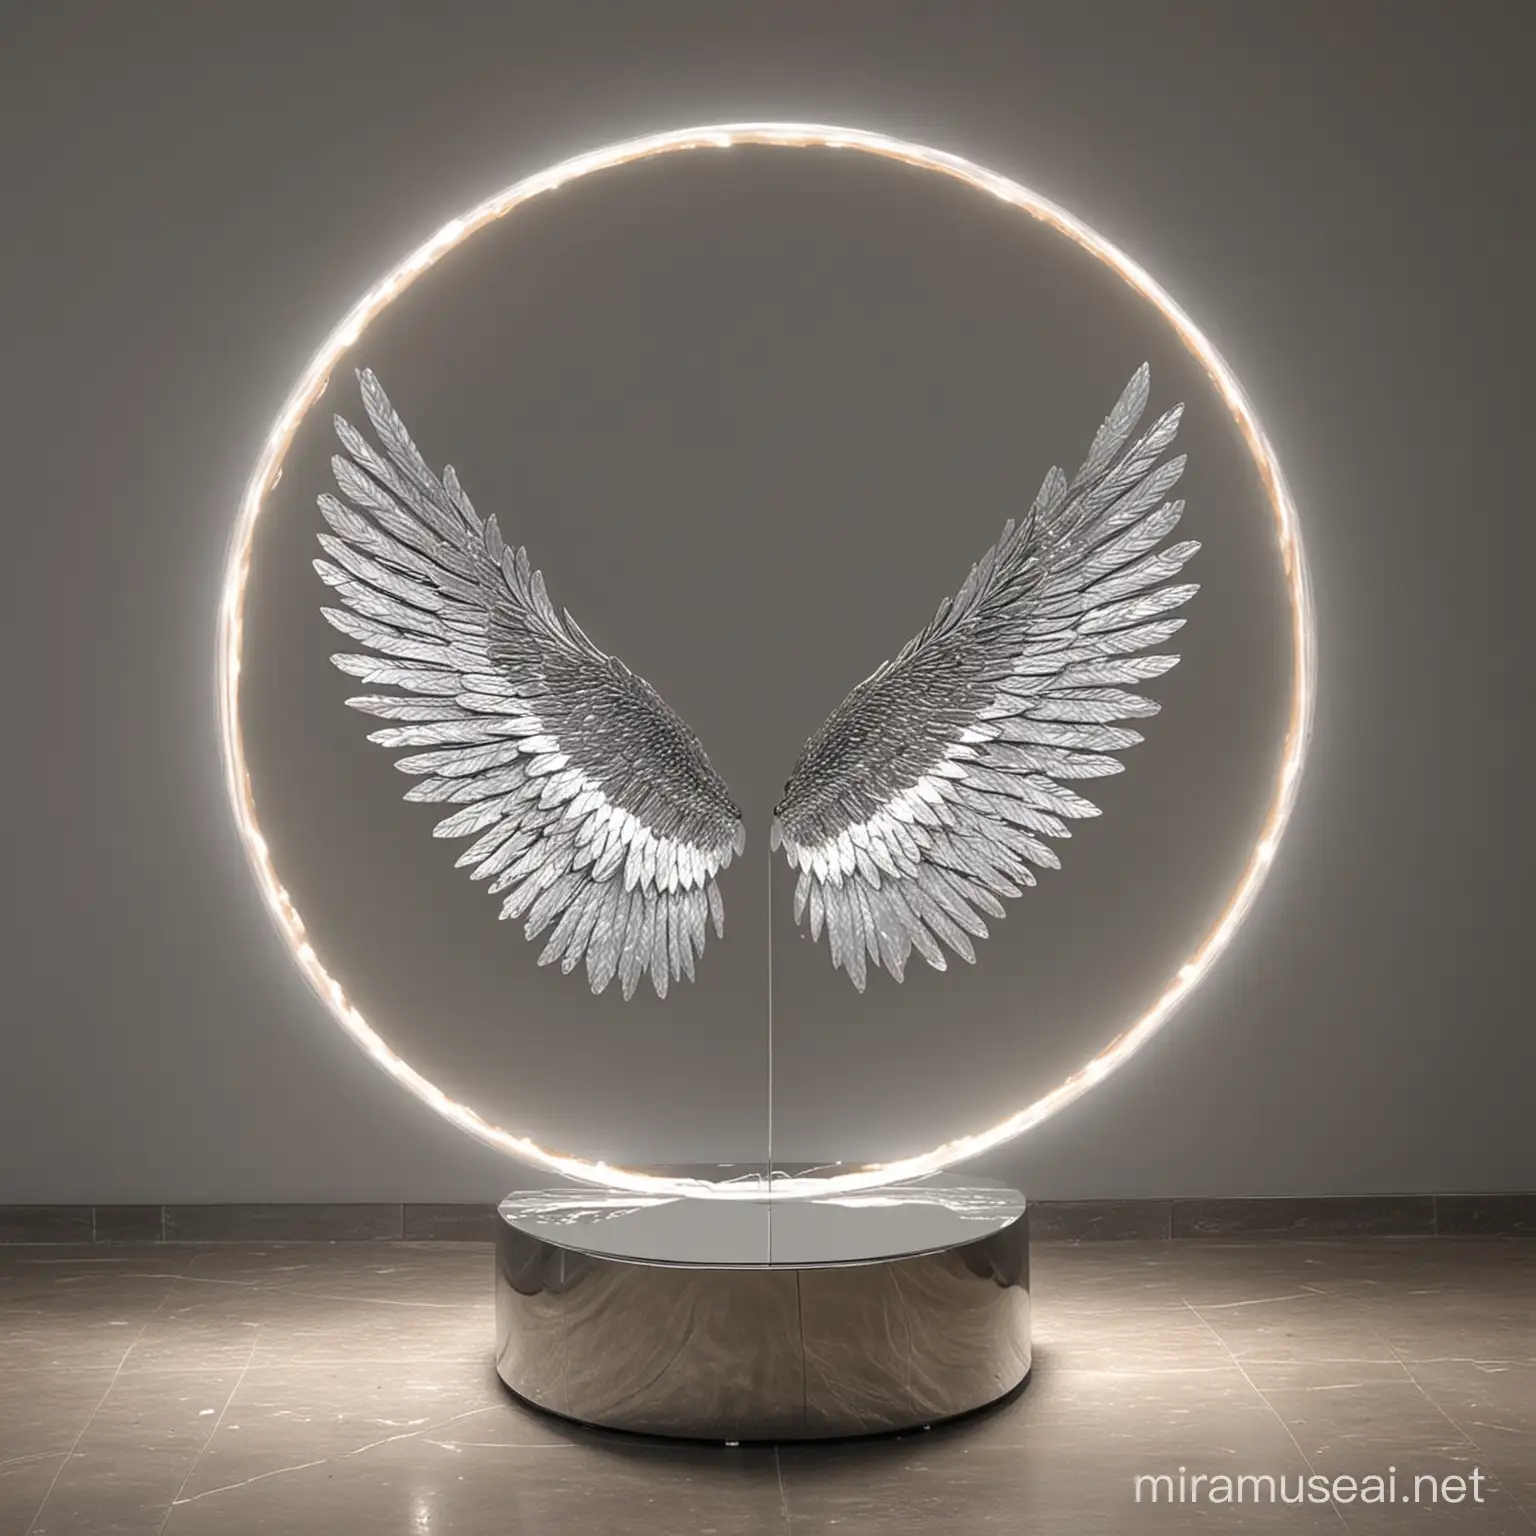 Metallic circle 3m diameter with led lighting on a mirror base modern design wings sculpture inside